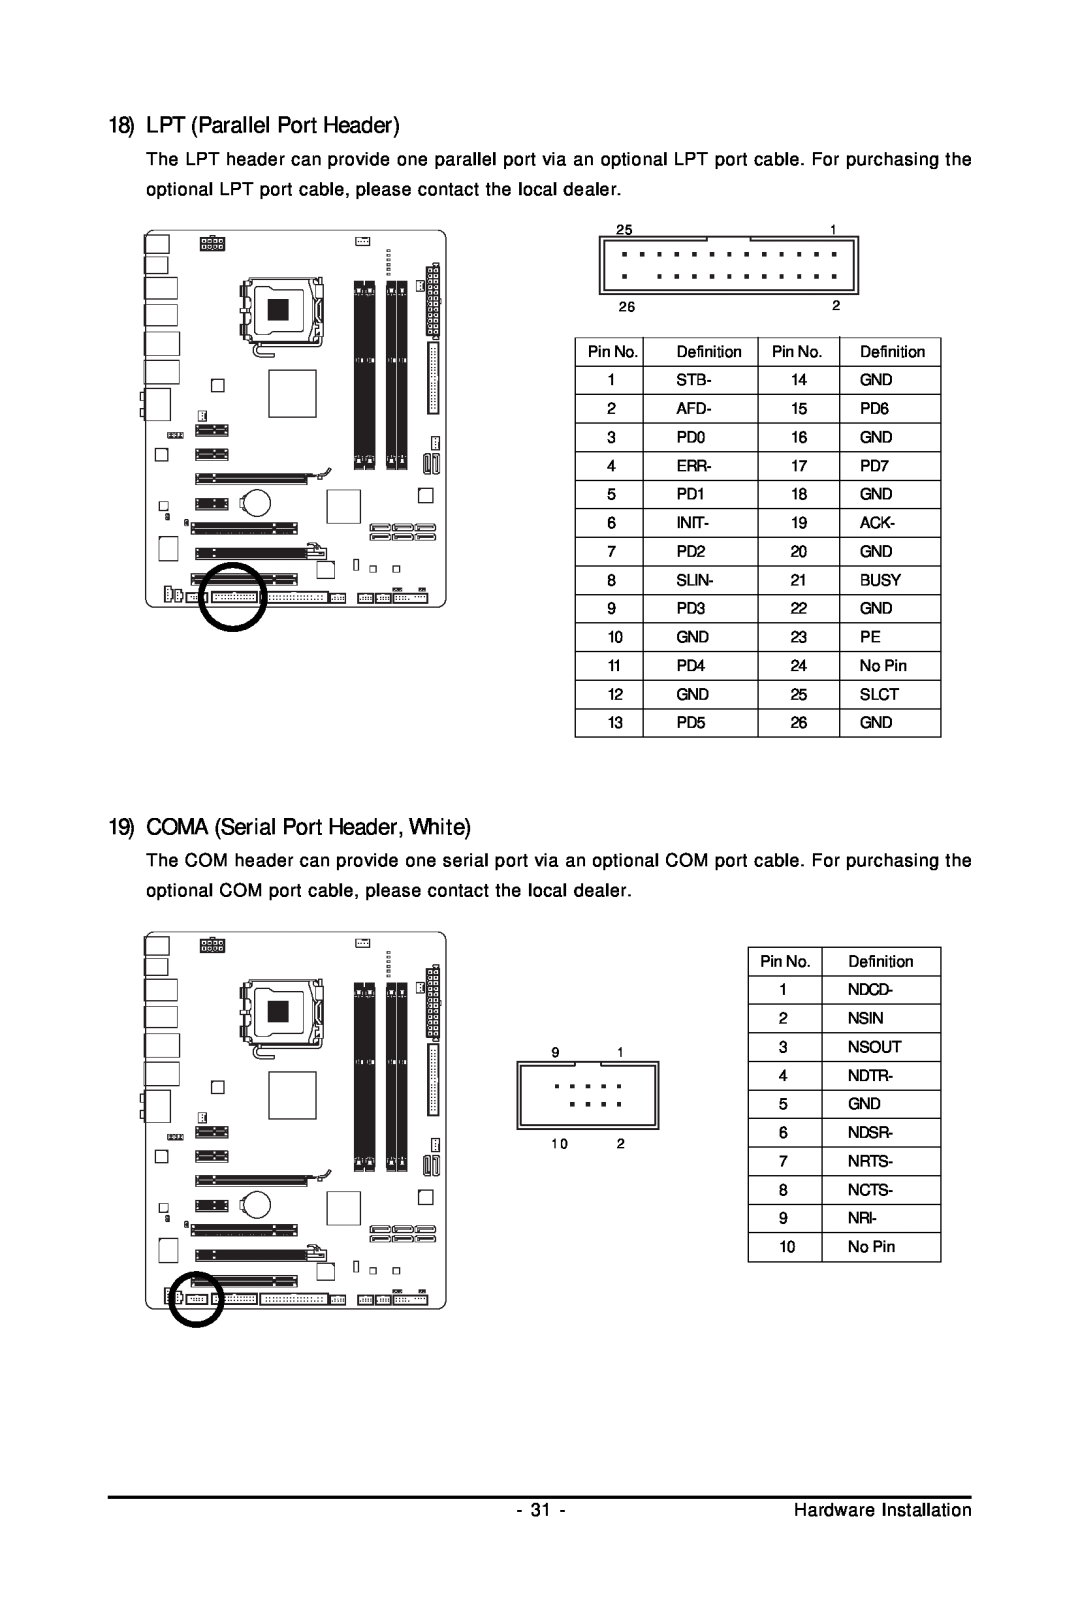 Gigabyte GA-EP45-UD3P user manual LPT Parallel Port Header, COMA Serial Port Header, White 